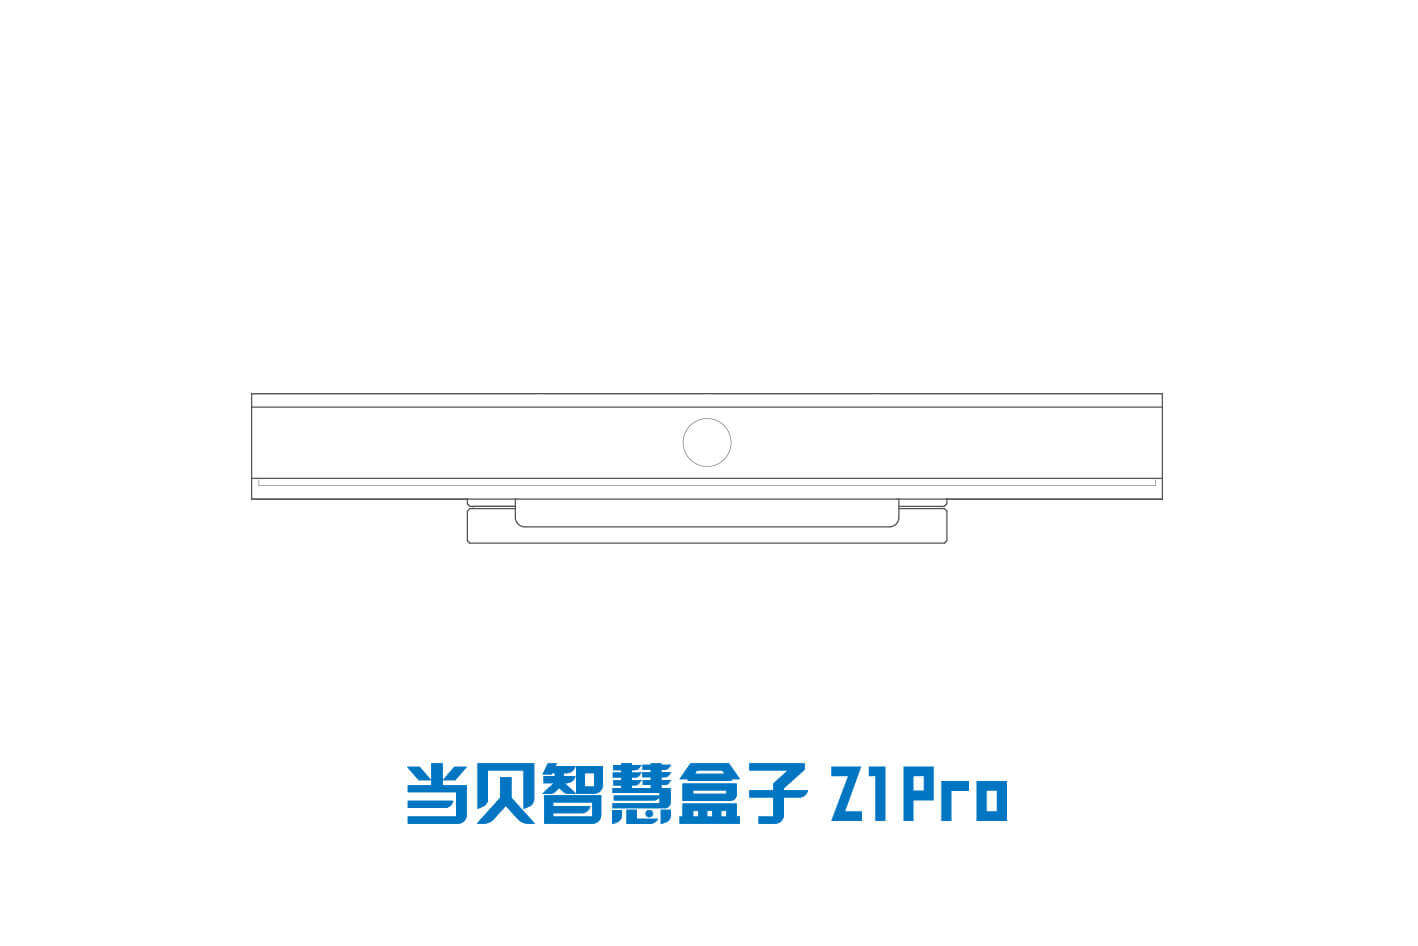 Z1 Pro说明书-02.jpg